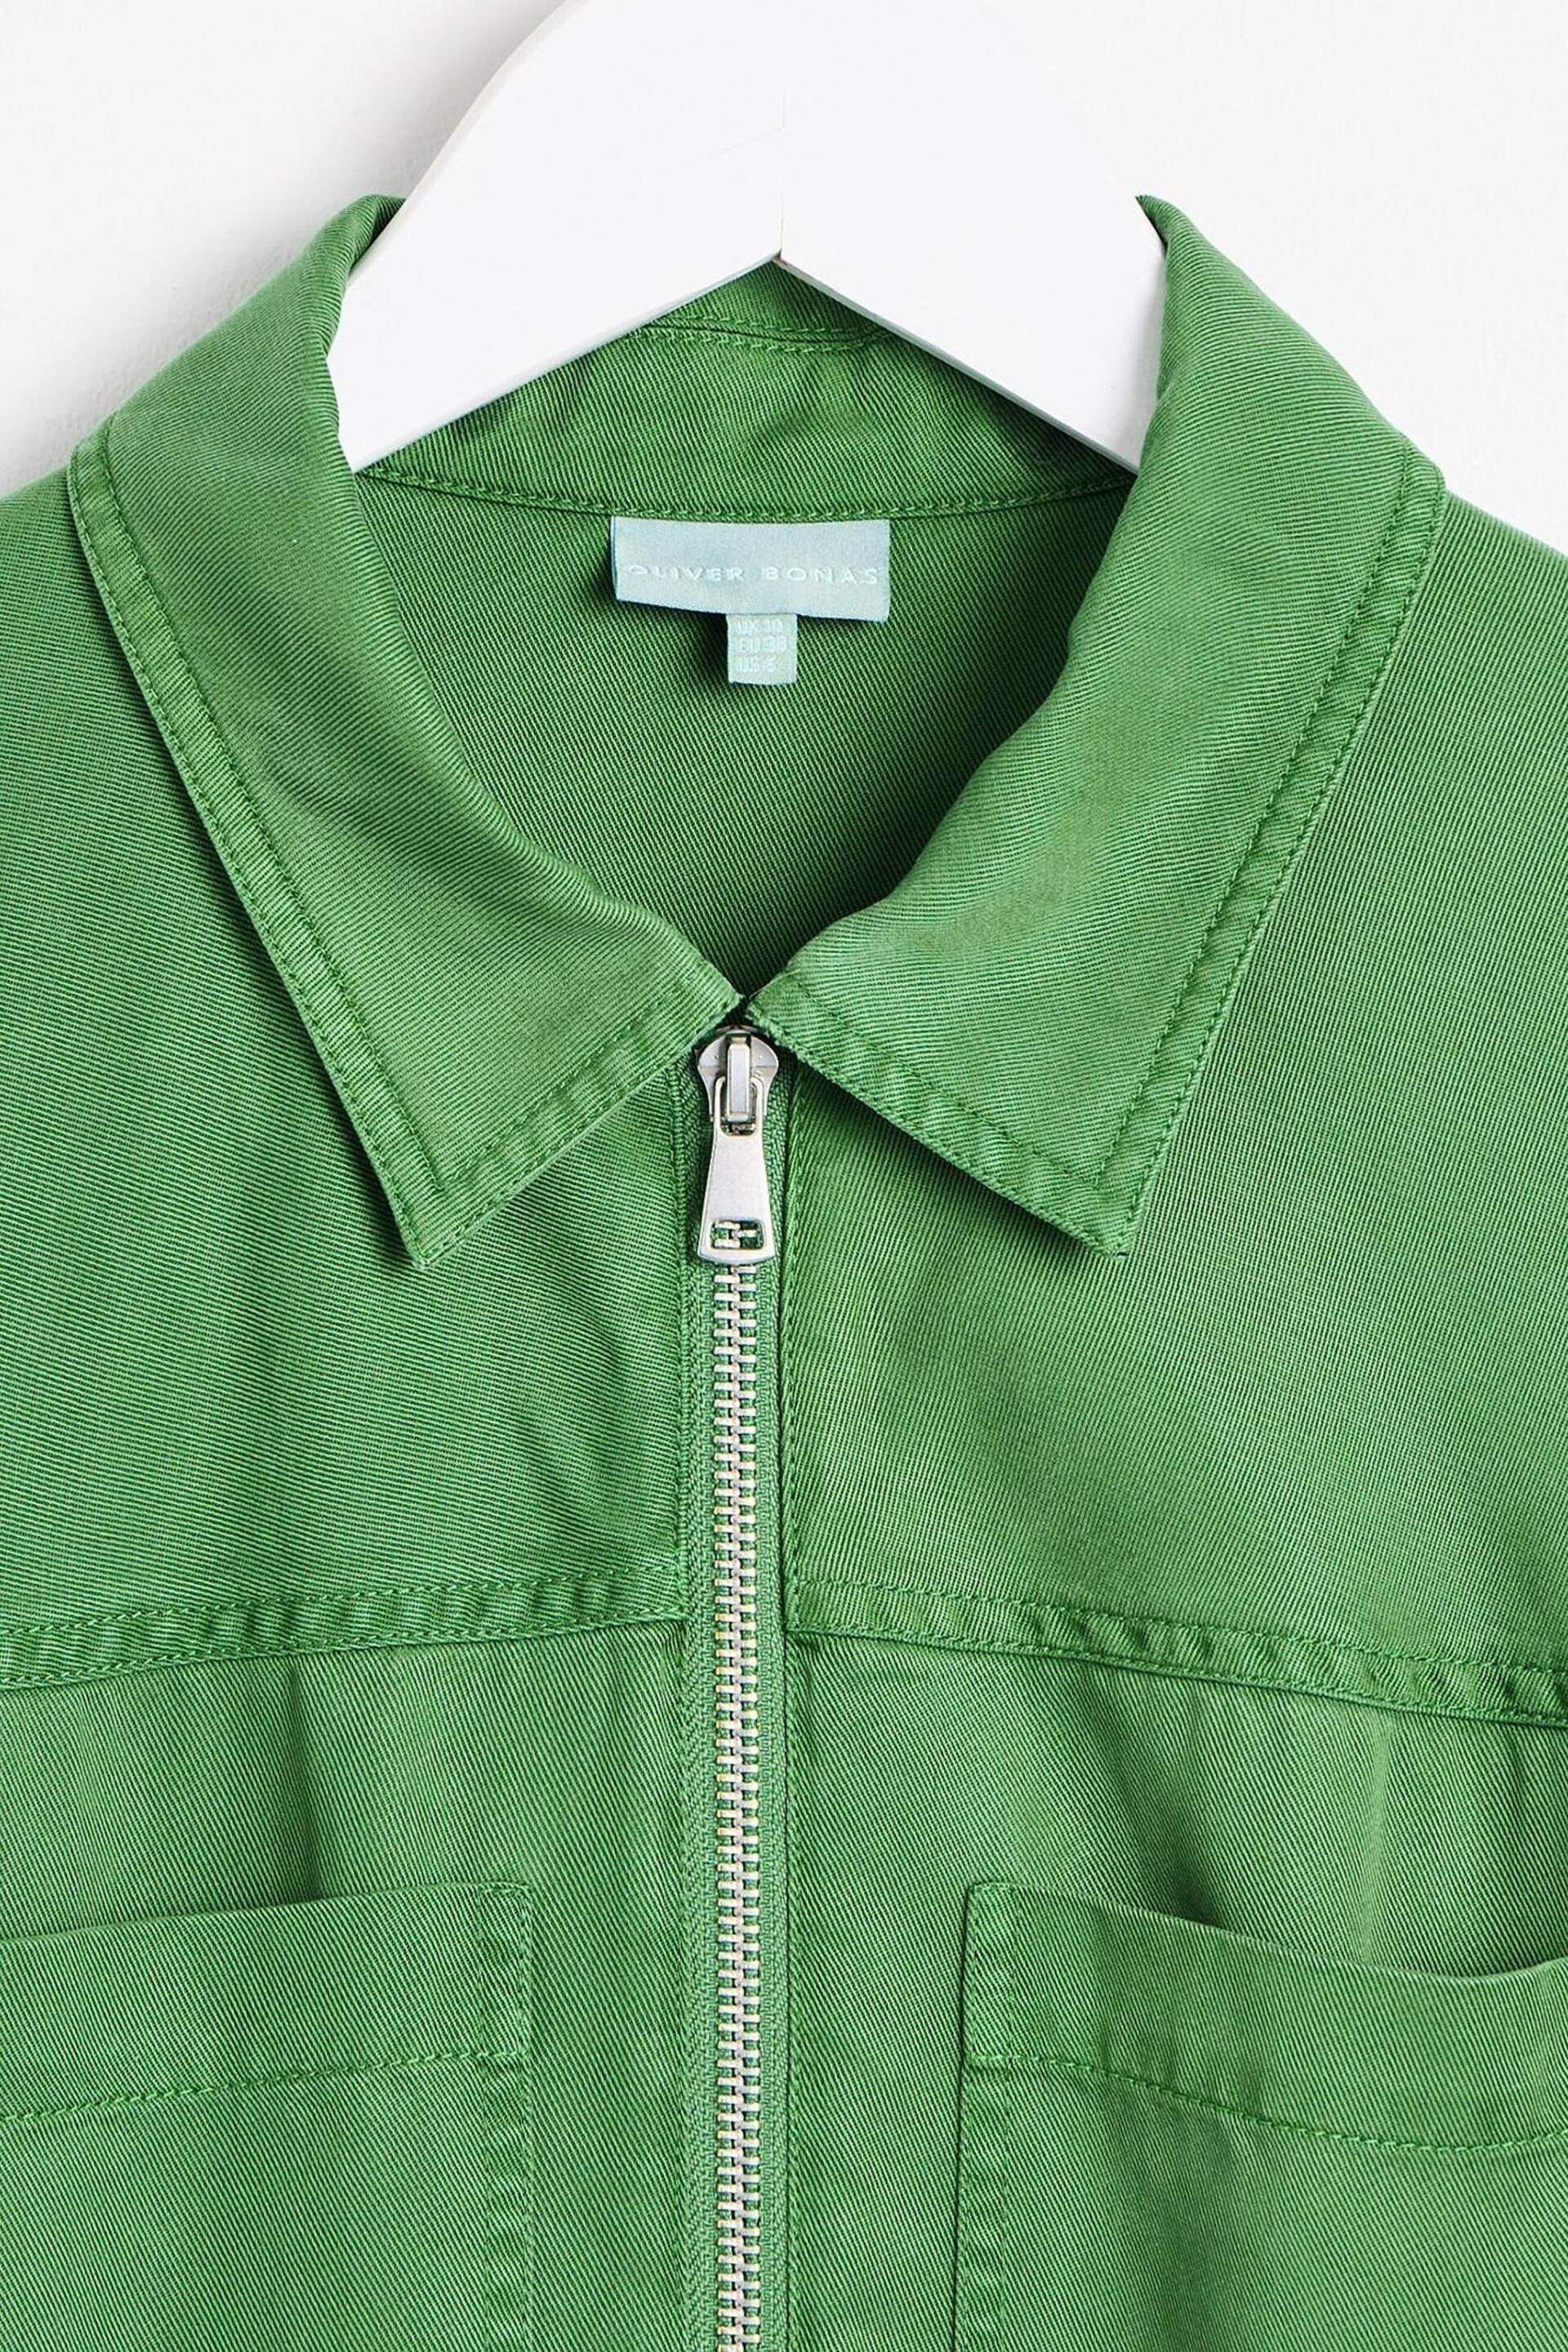 Oliver Bonas Green Zip Up Short Sleeve Jumpsuit - Image 4 of 8